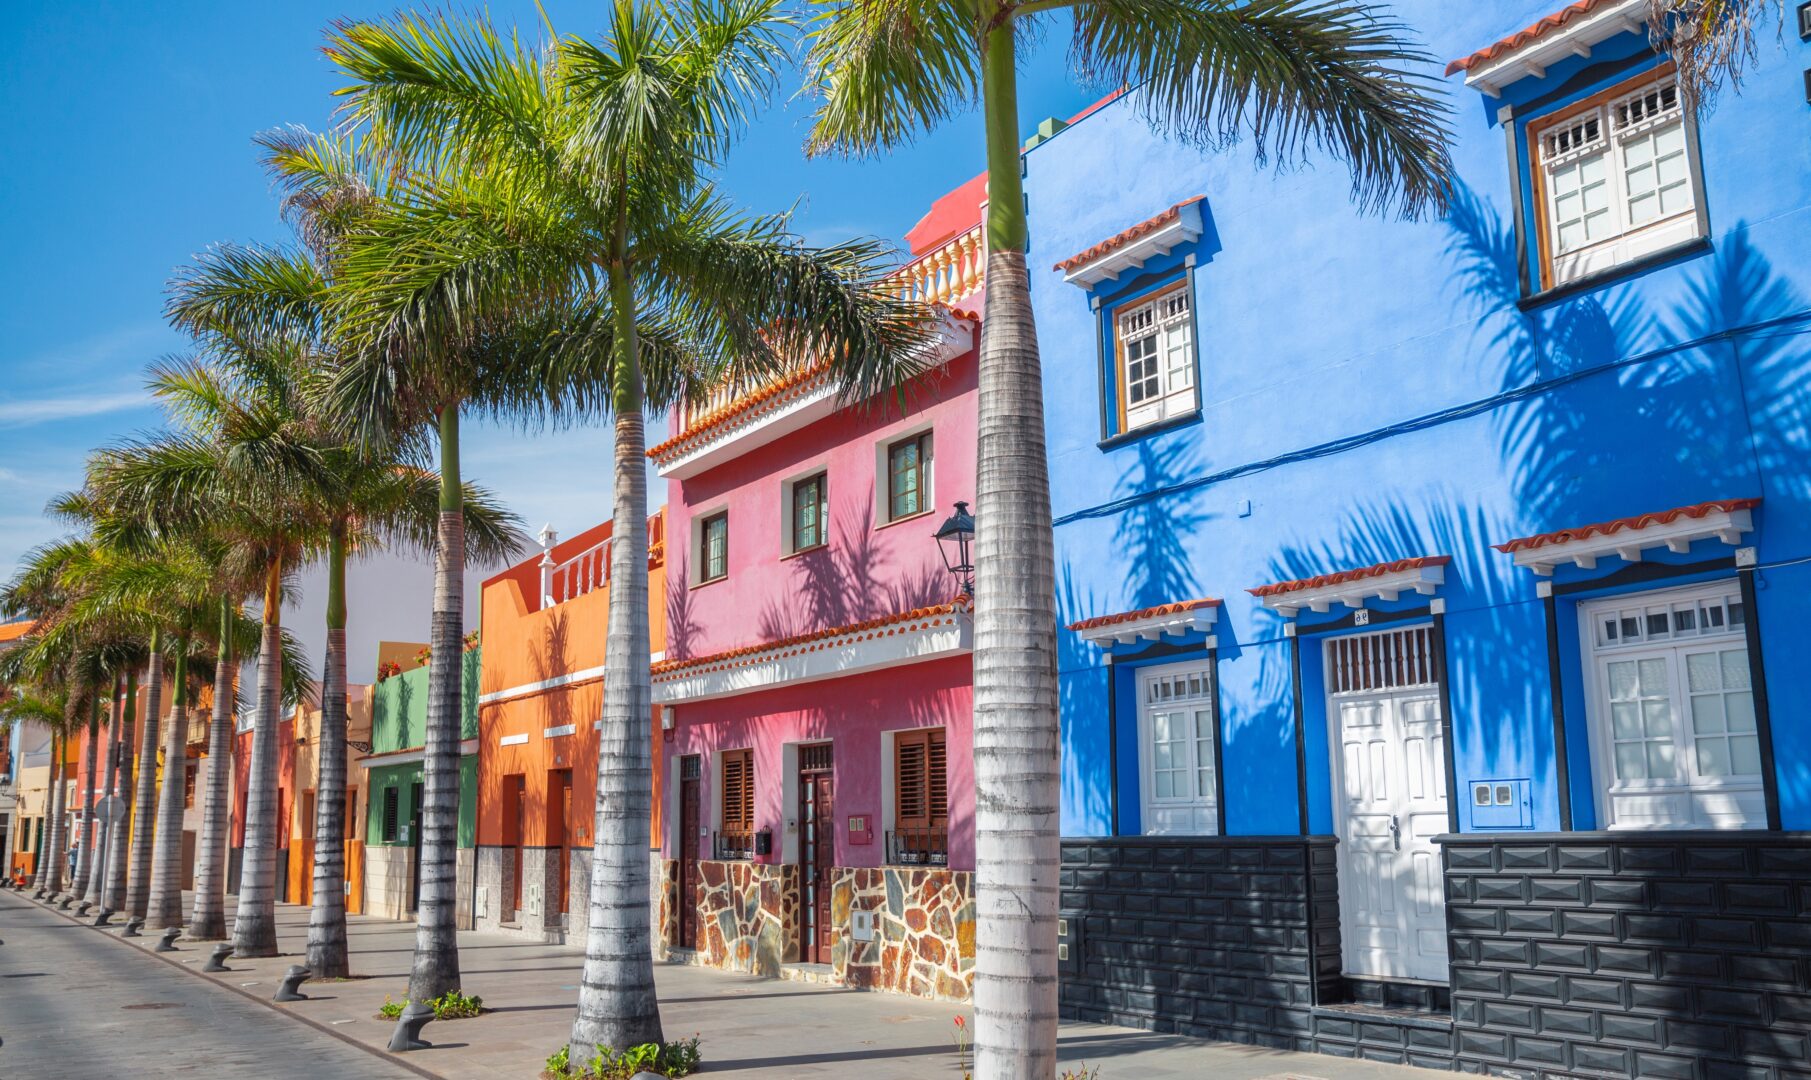 Bunte Häuser in Puerto de la Cruz auf Teneriffa in den Kanarischen Inseln